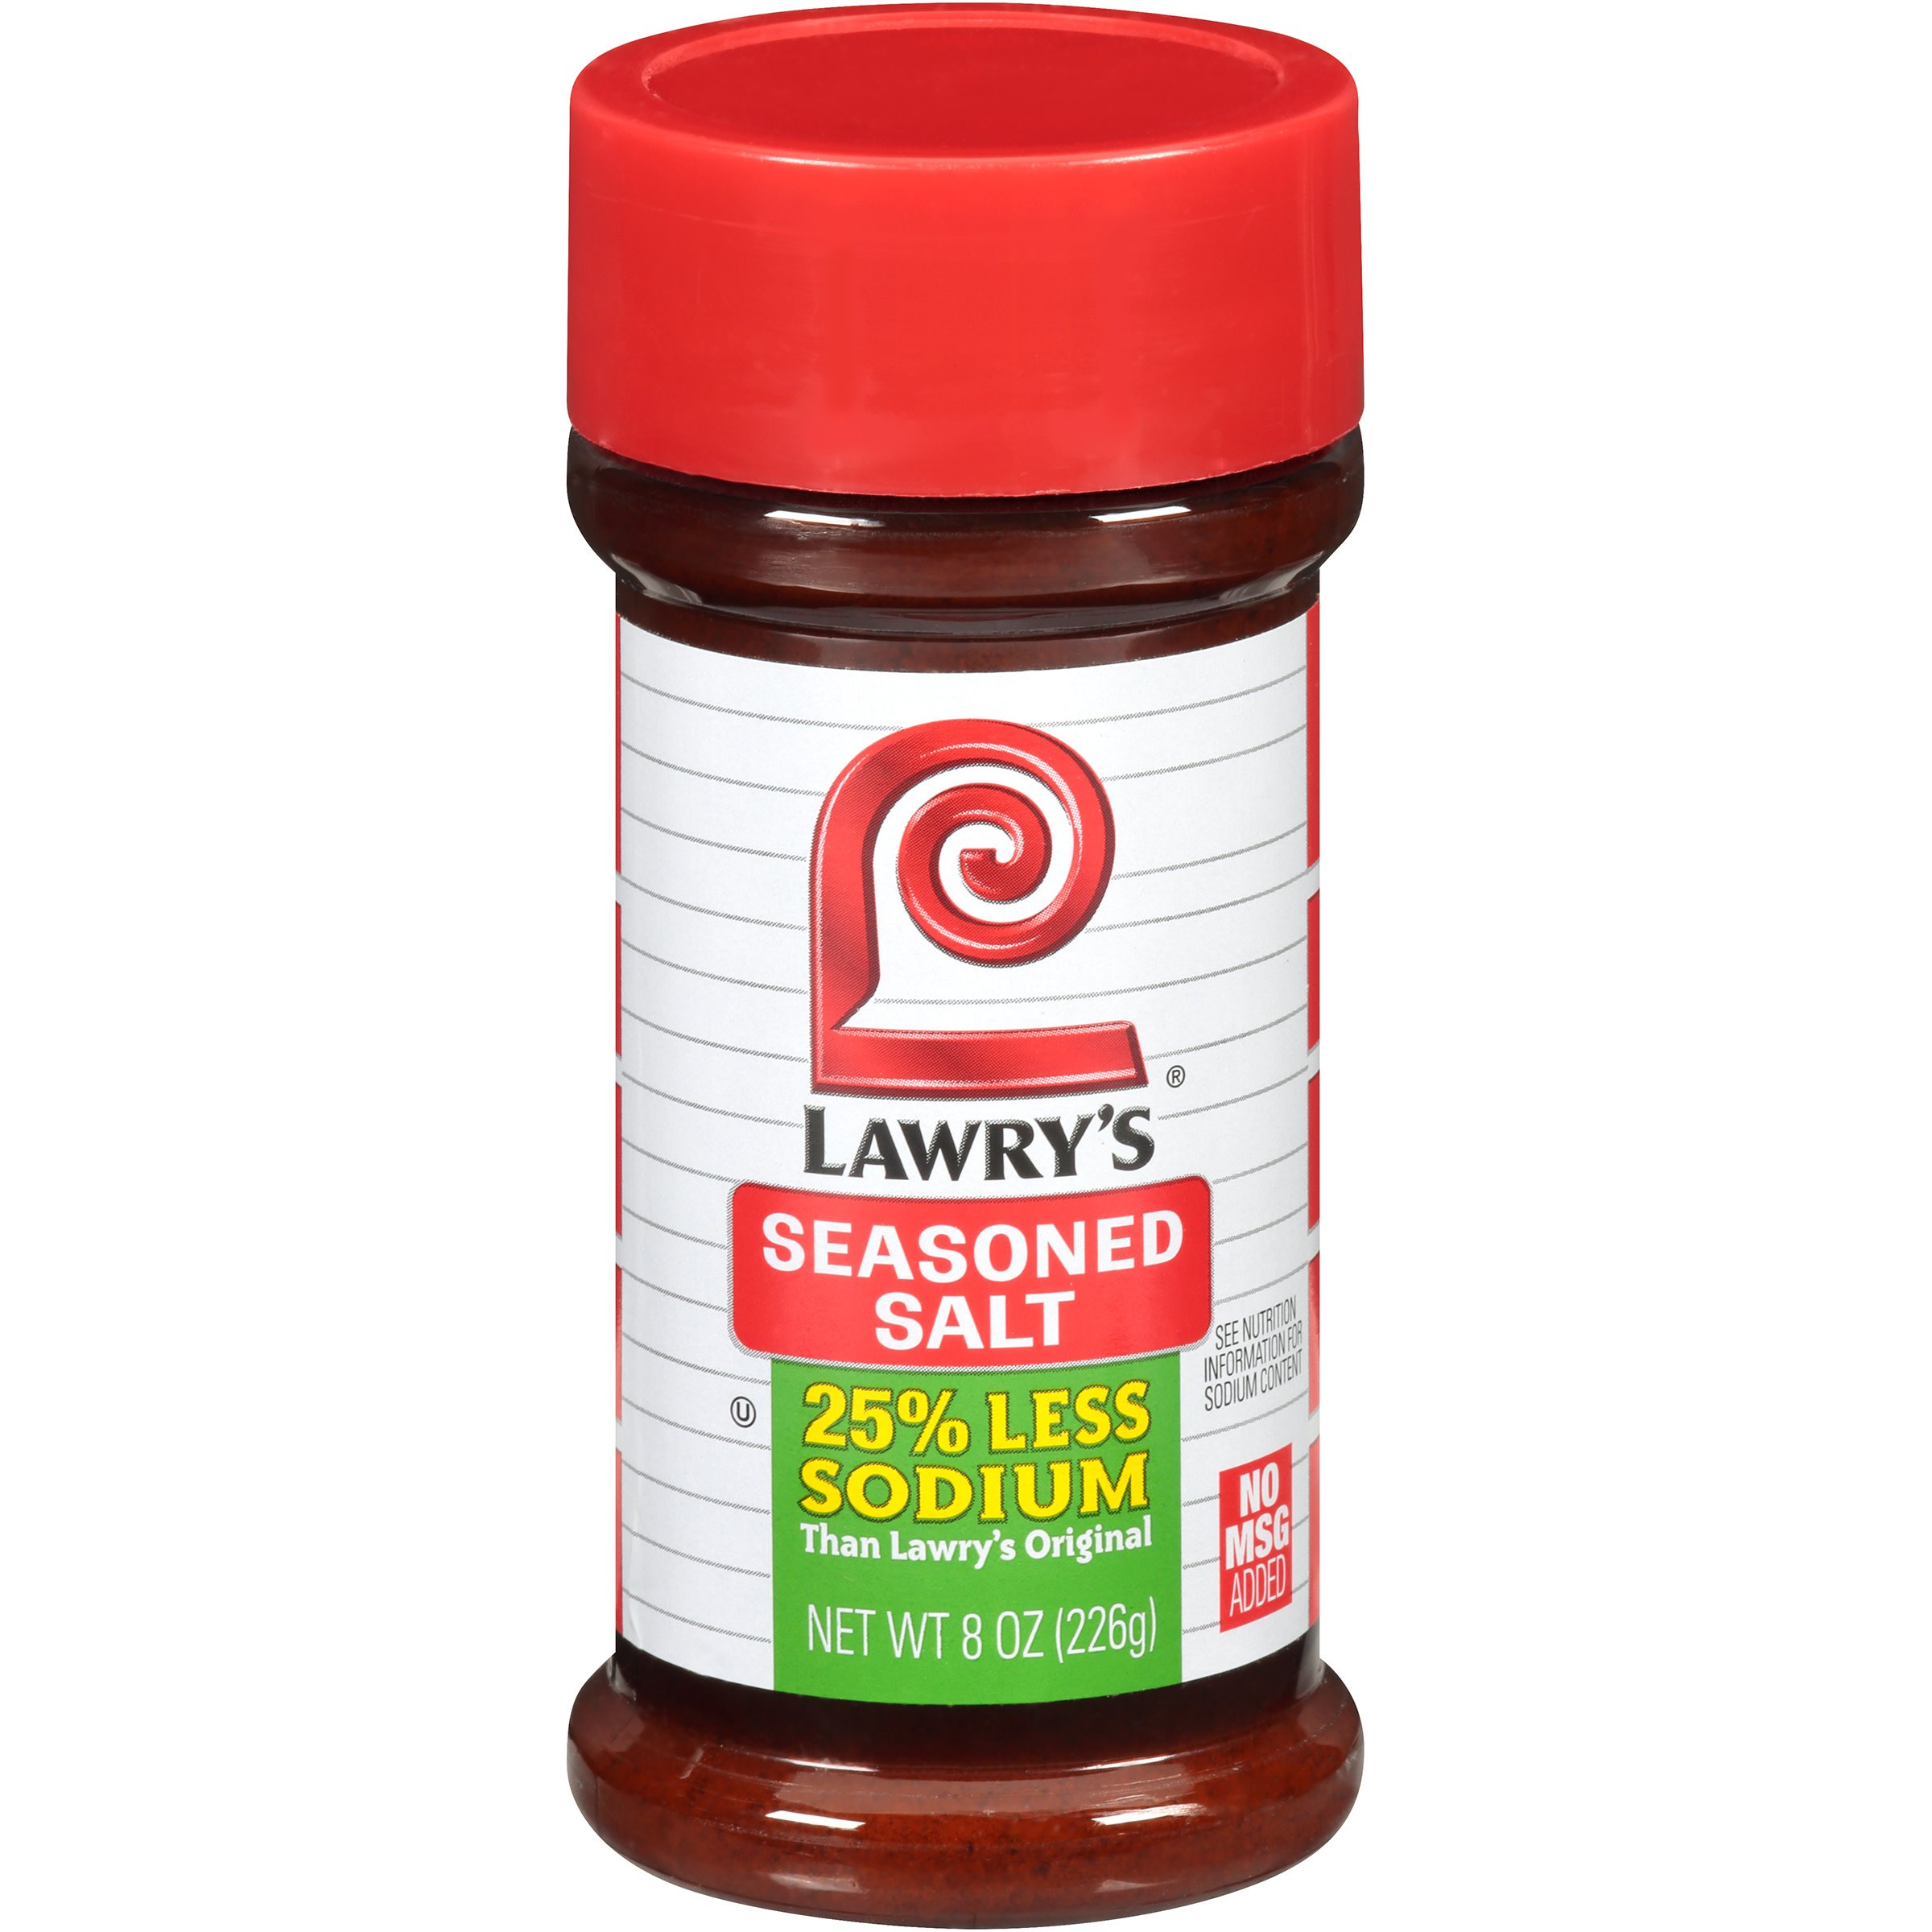 Lawry's 25% Less Sodium Seasoned Salt - Shop Herbs & Spices at H-E-B